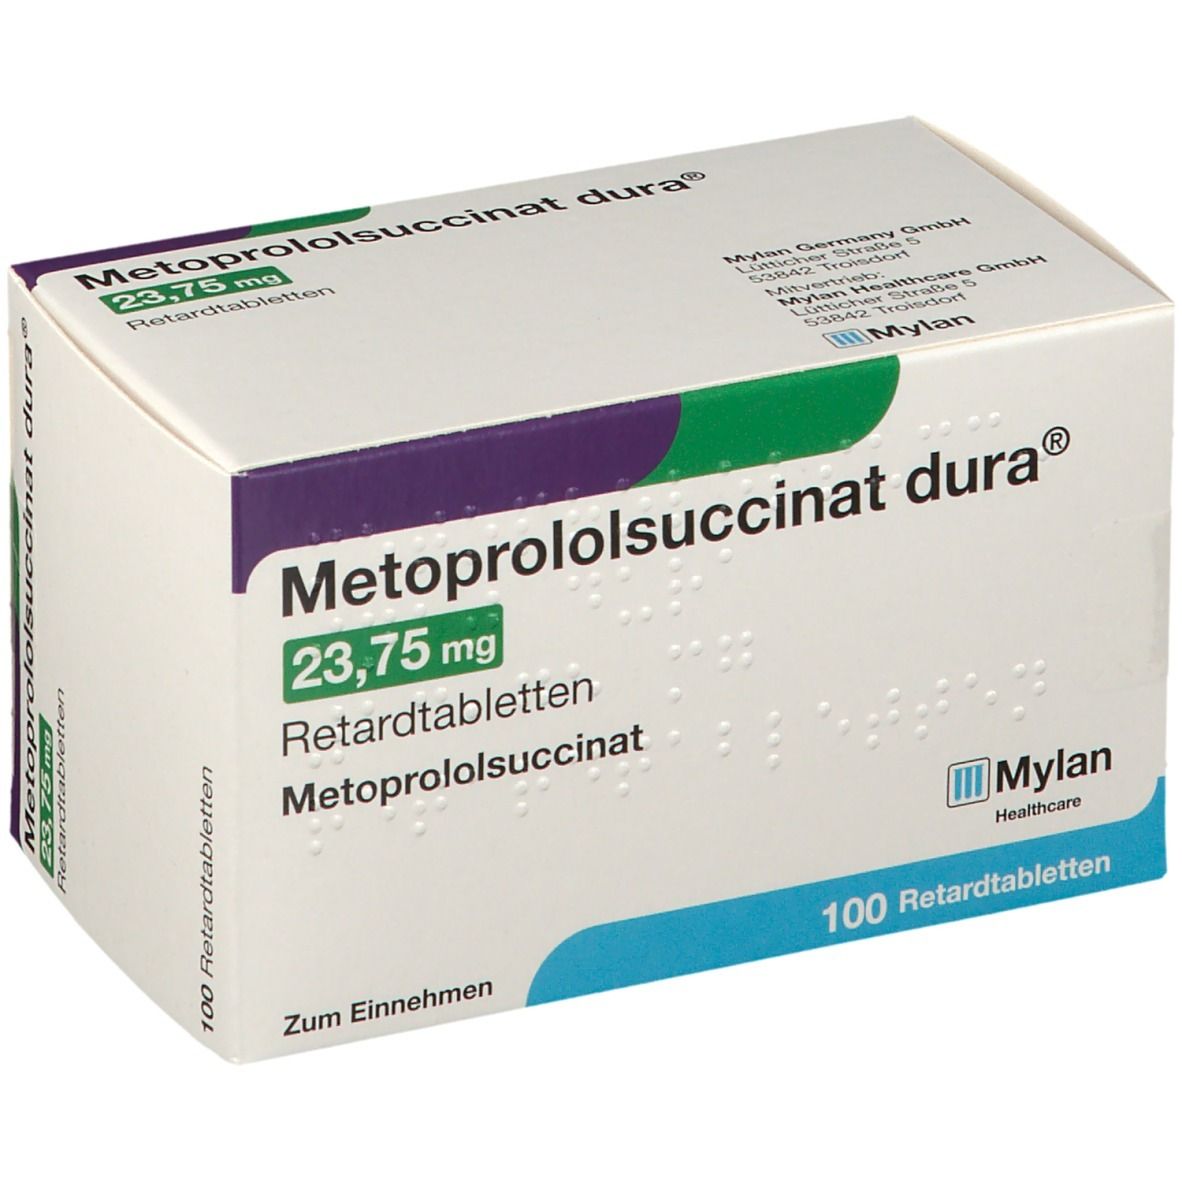 Metoprololsuccinat dura® 23,75 mg